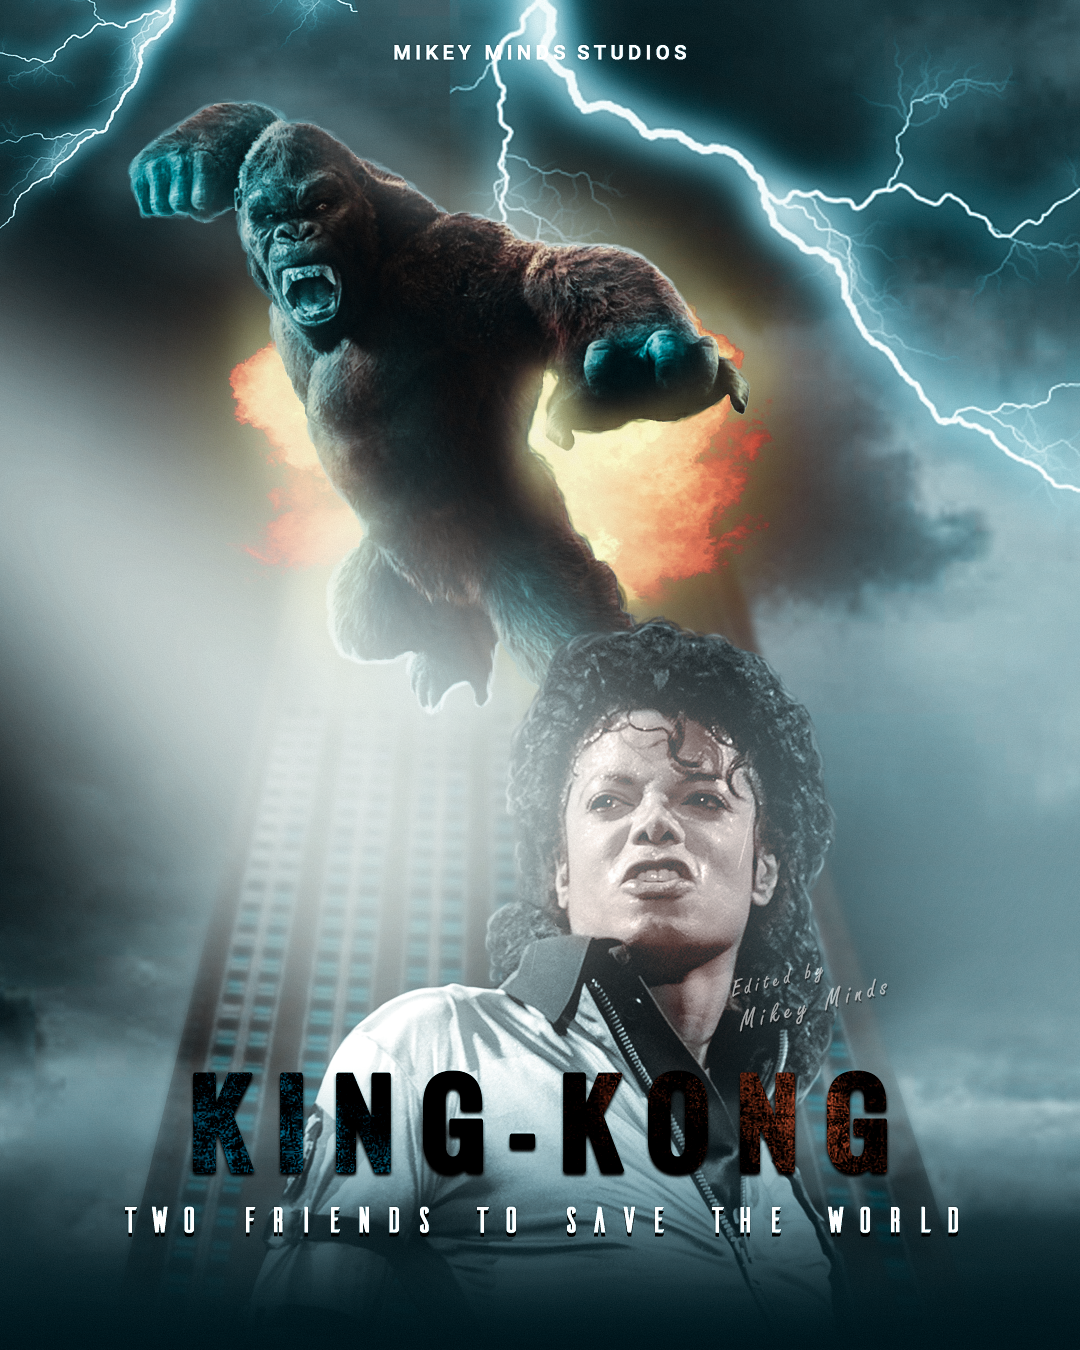 Michael Jackson Photoshop, KING – KONG Movie Poster